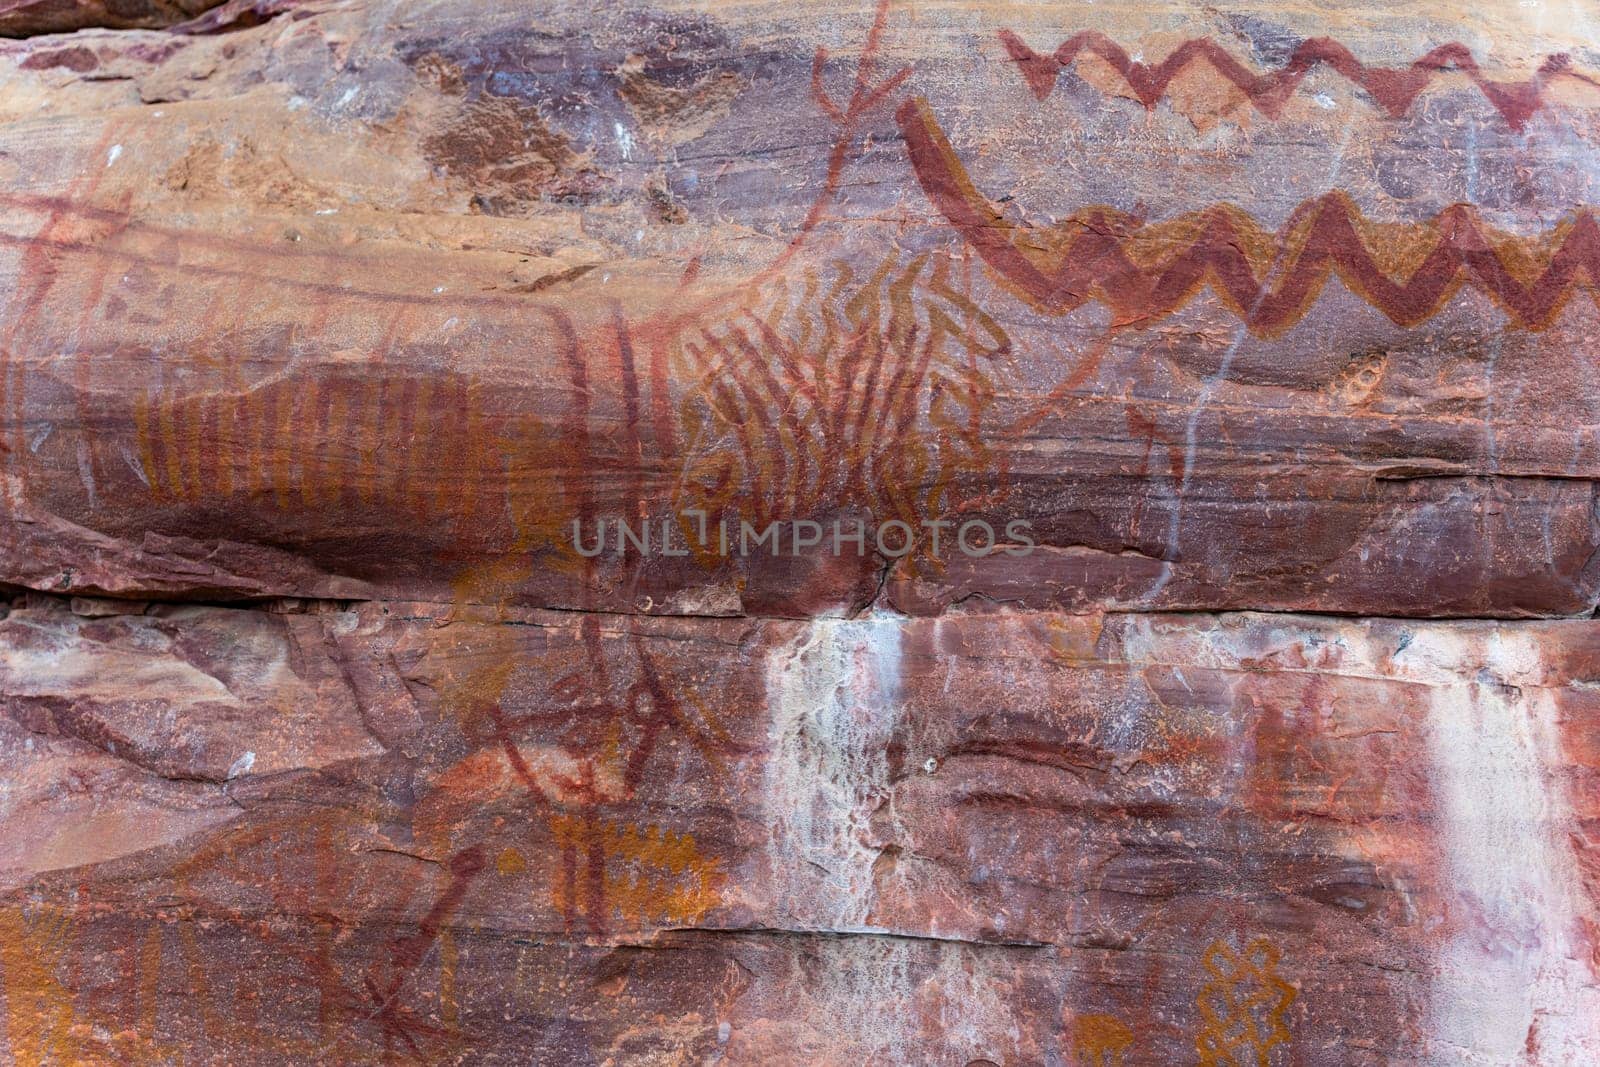 Ancient Rock Art Depicting Animals and Symbols by FerradalFCG